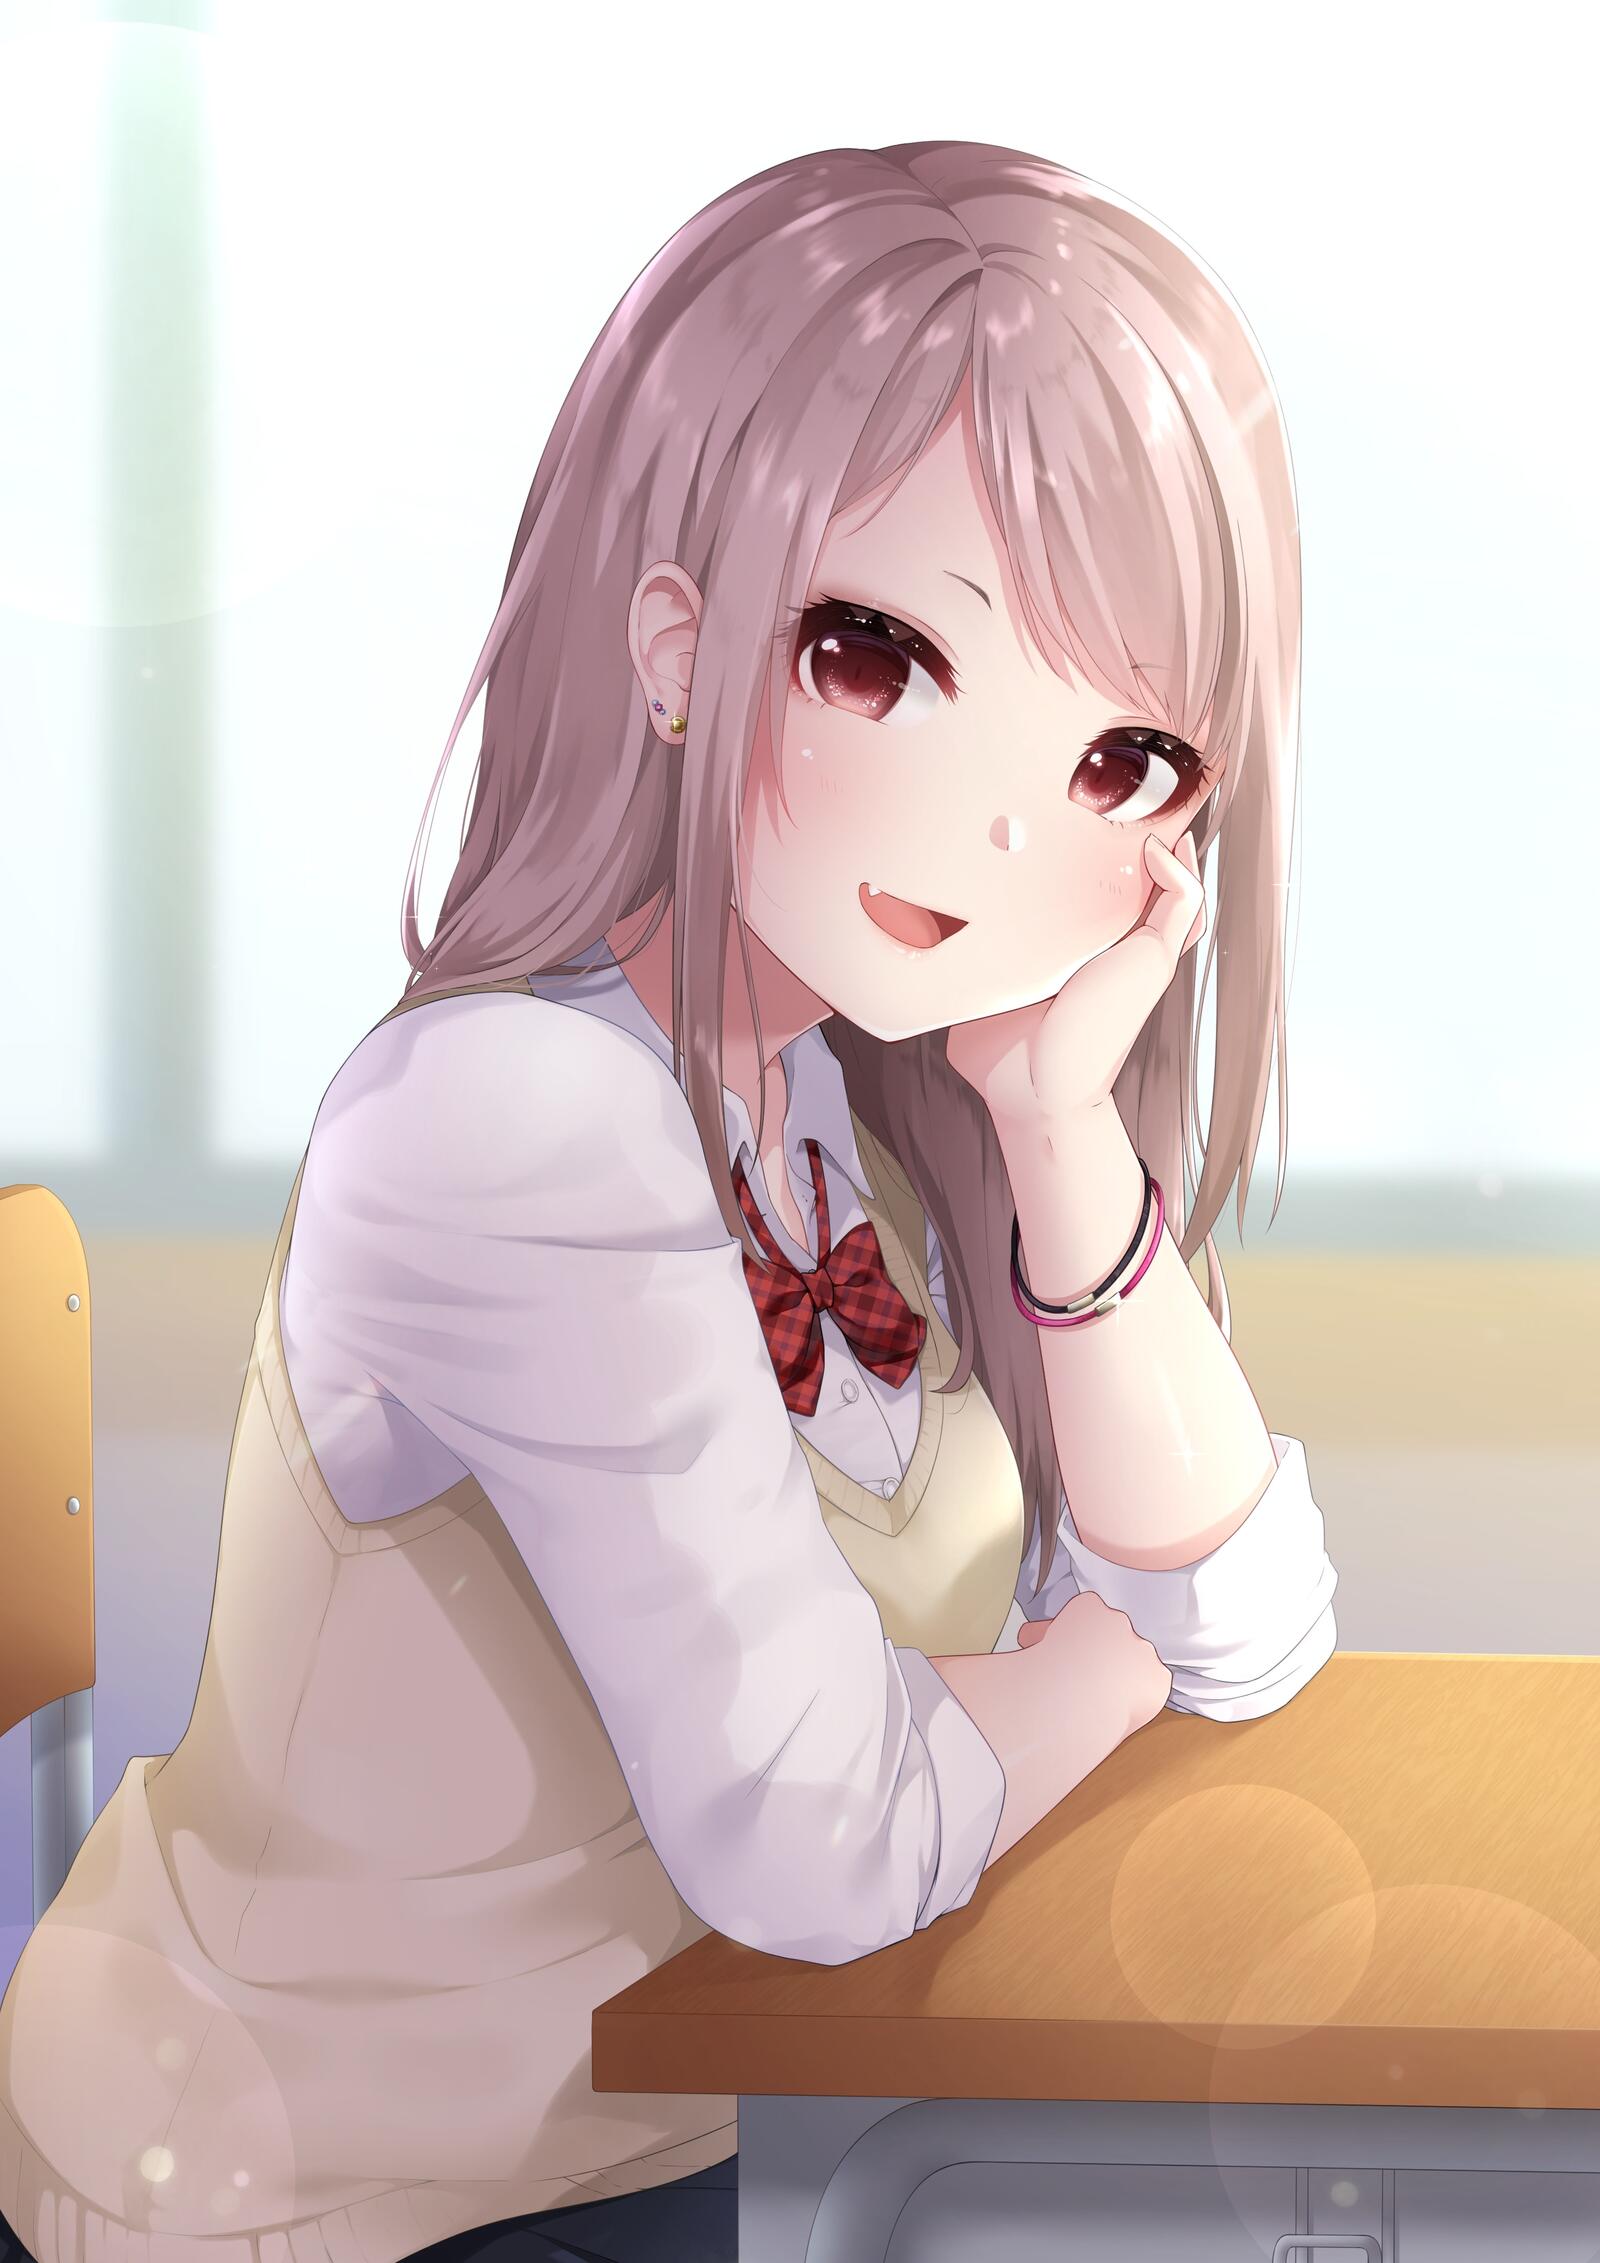 Wallpapers anime school girl smiling uniform on the desktop